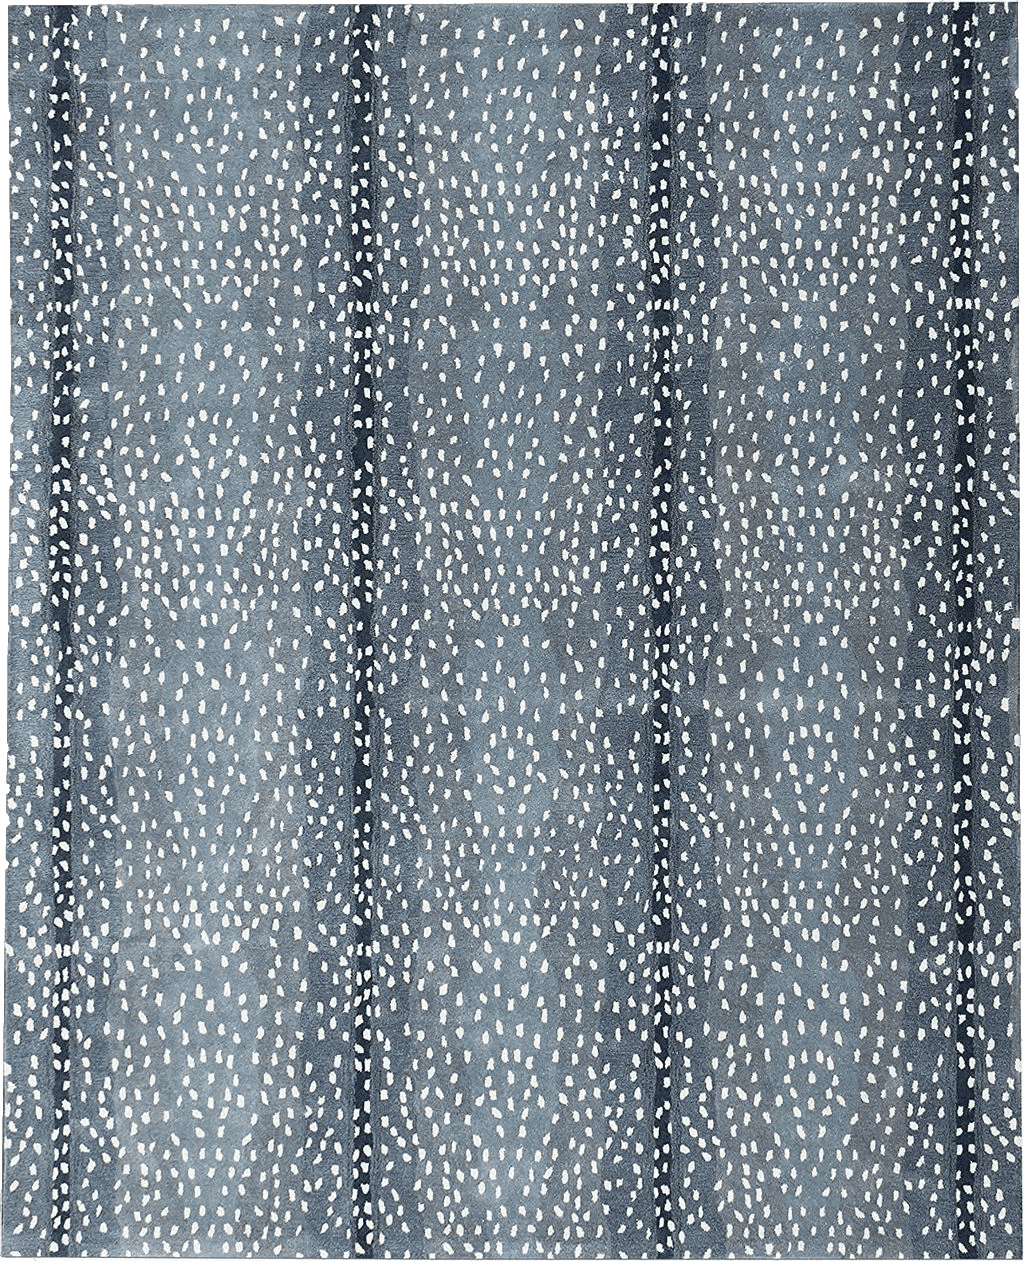 Antelope Natural Weave Wallard Design Antelope Cheetah Blue Animal Contemporary Handmade 100% Woolen Area Rugs & Carpets (8x10 ft)